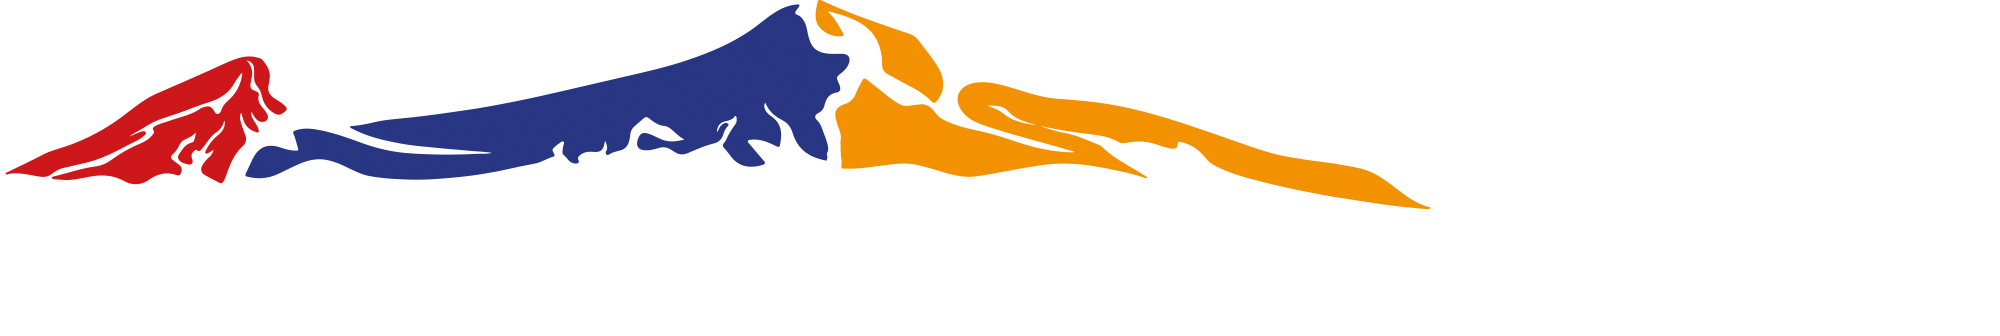 Armenian Christian Mission